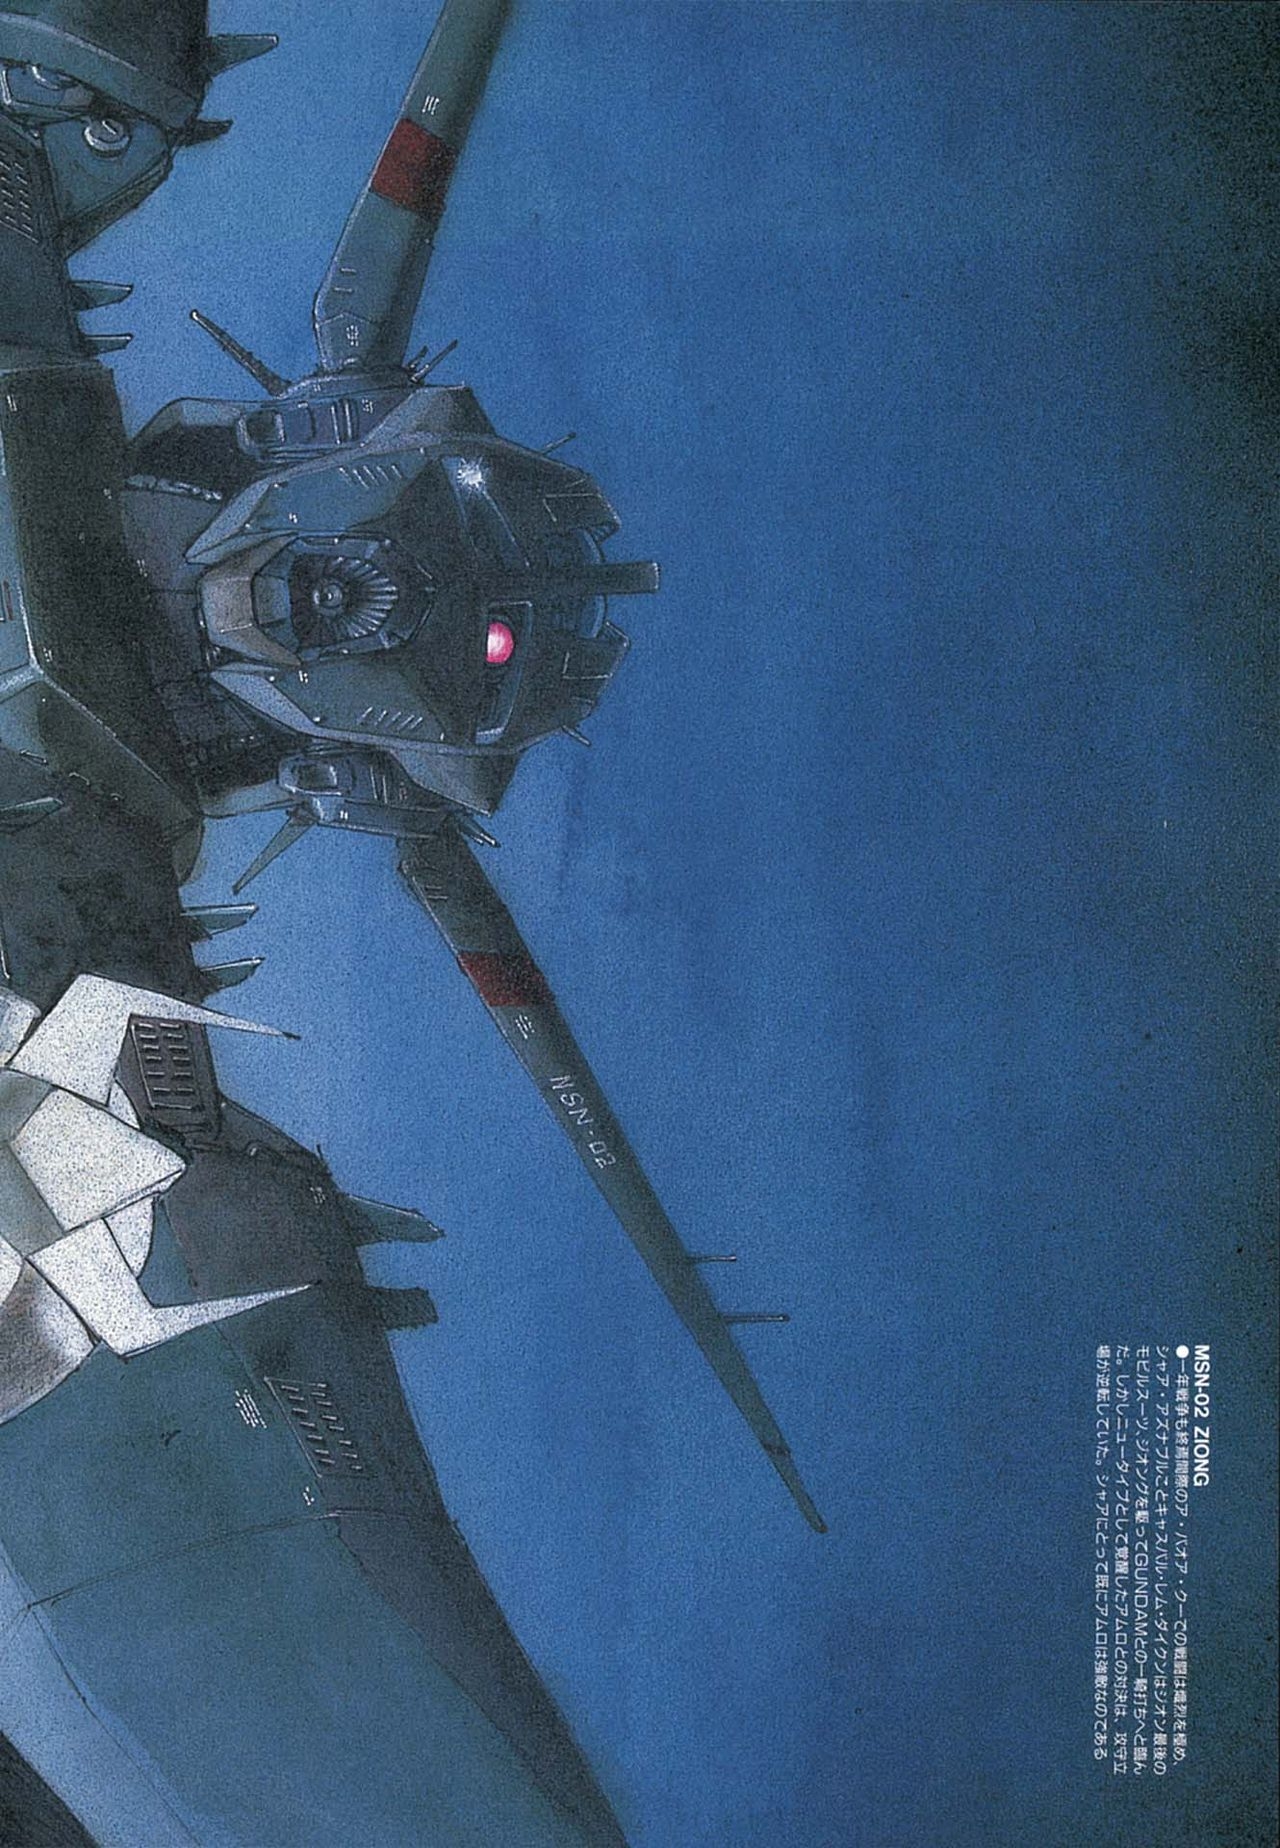 [Kazuhisa Kondo] Kazuhisa Kondo 2D & 3D Works - Go Ahead - From Mobile Suit Gundam to Original Mechanism 33